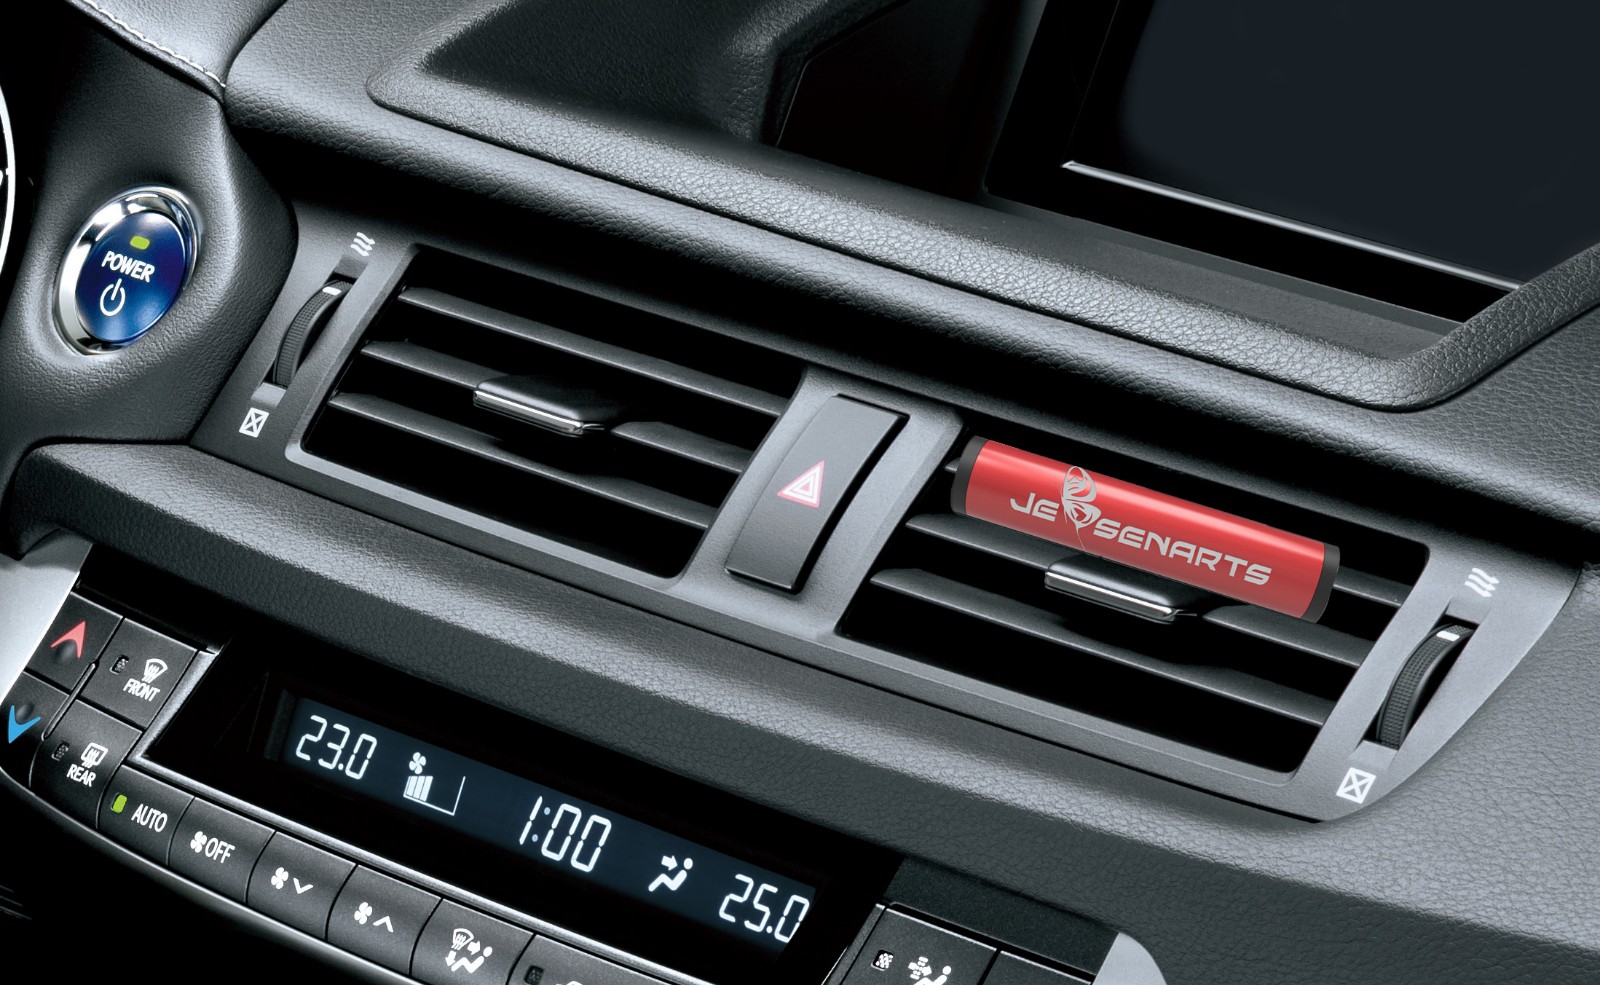 JEBSEN ARTS vehicle car air freshener vent clip sticker for car-7